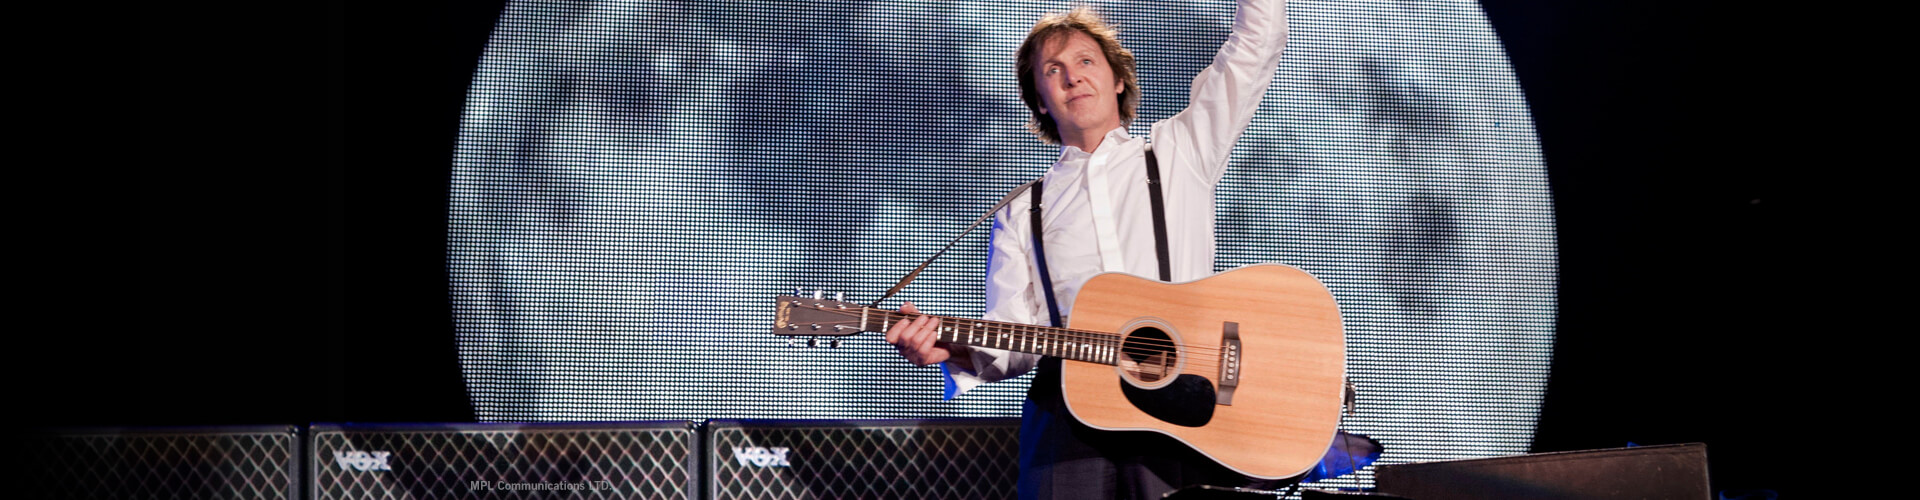 Paul Mccartney holding acoustic guitar